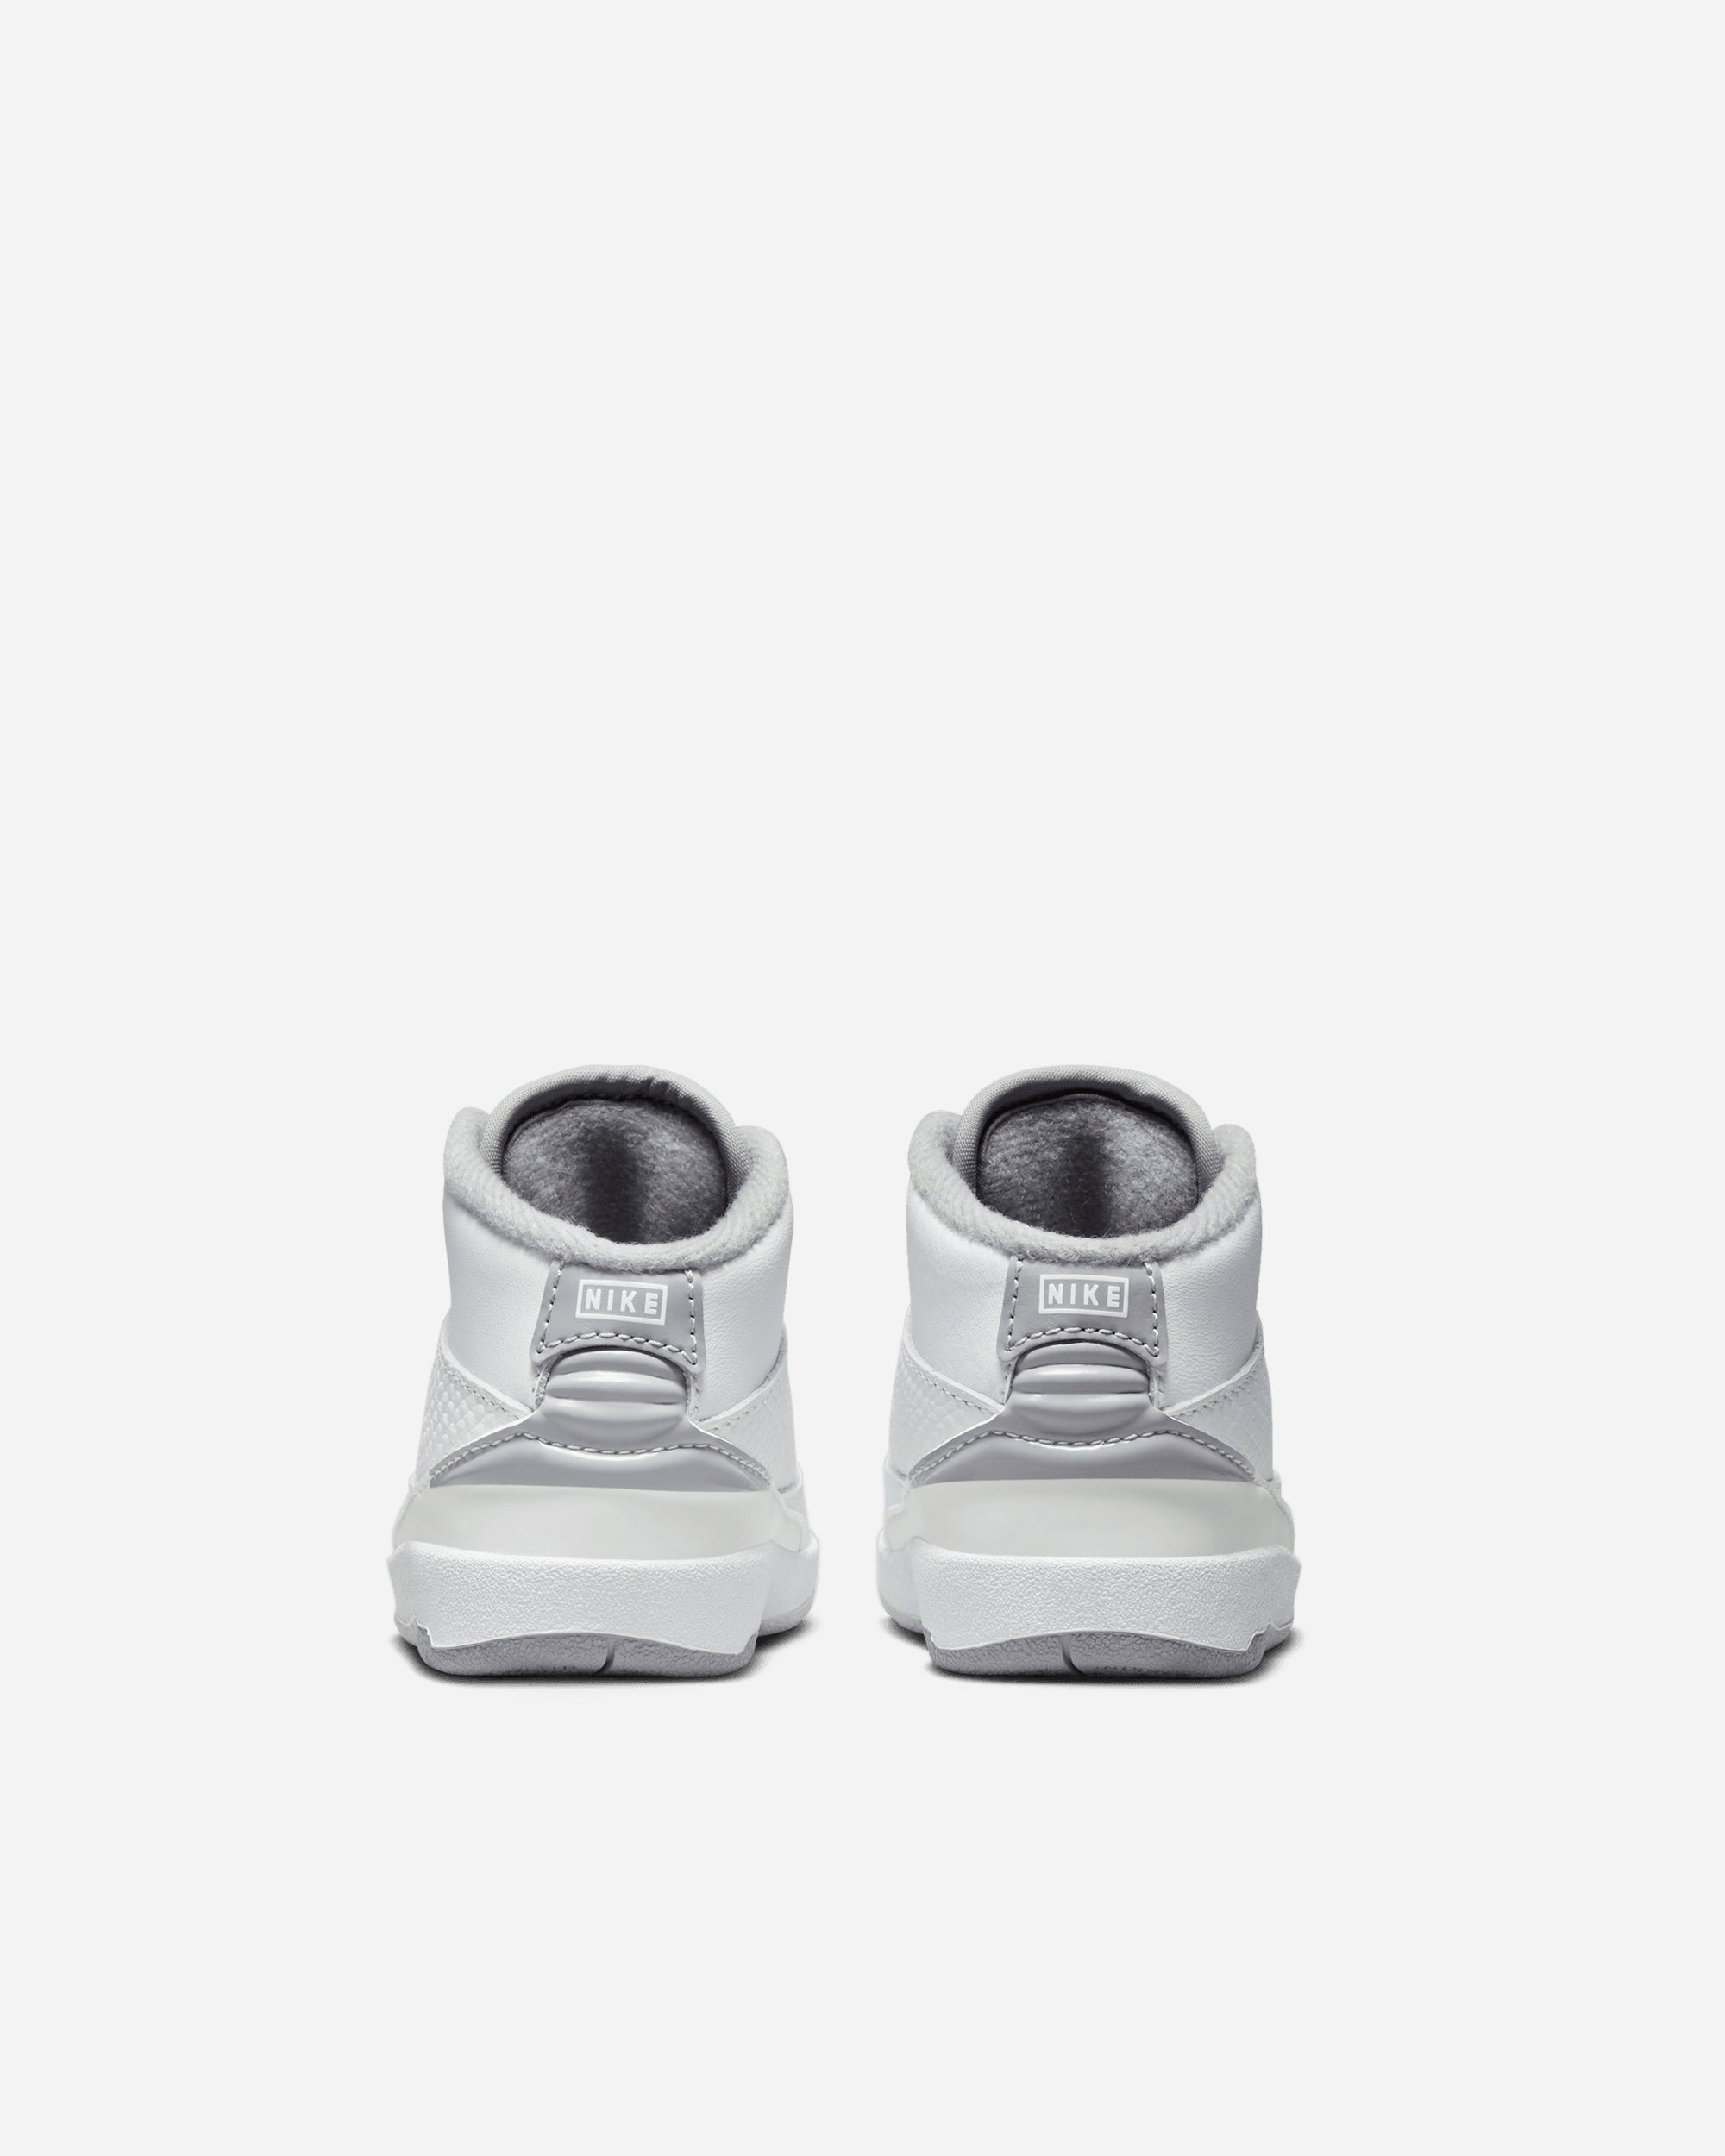 Jordan Brand Jordan 2 Retro (Toddler) WHITE/CEMENT GREY-SAIL-BLACK DQ8563-100